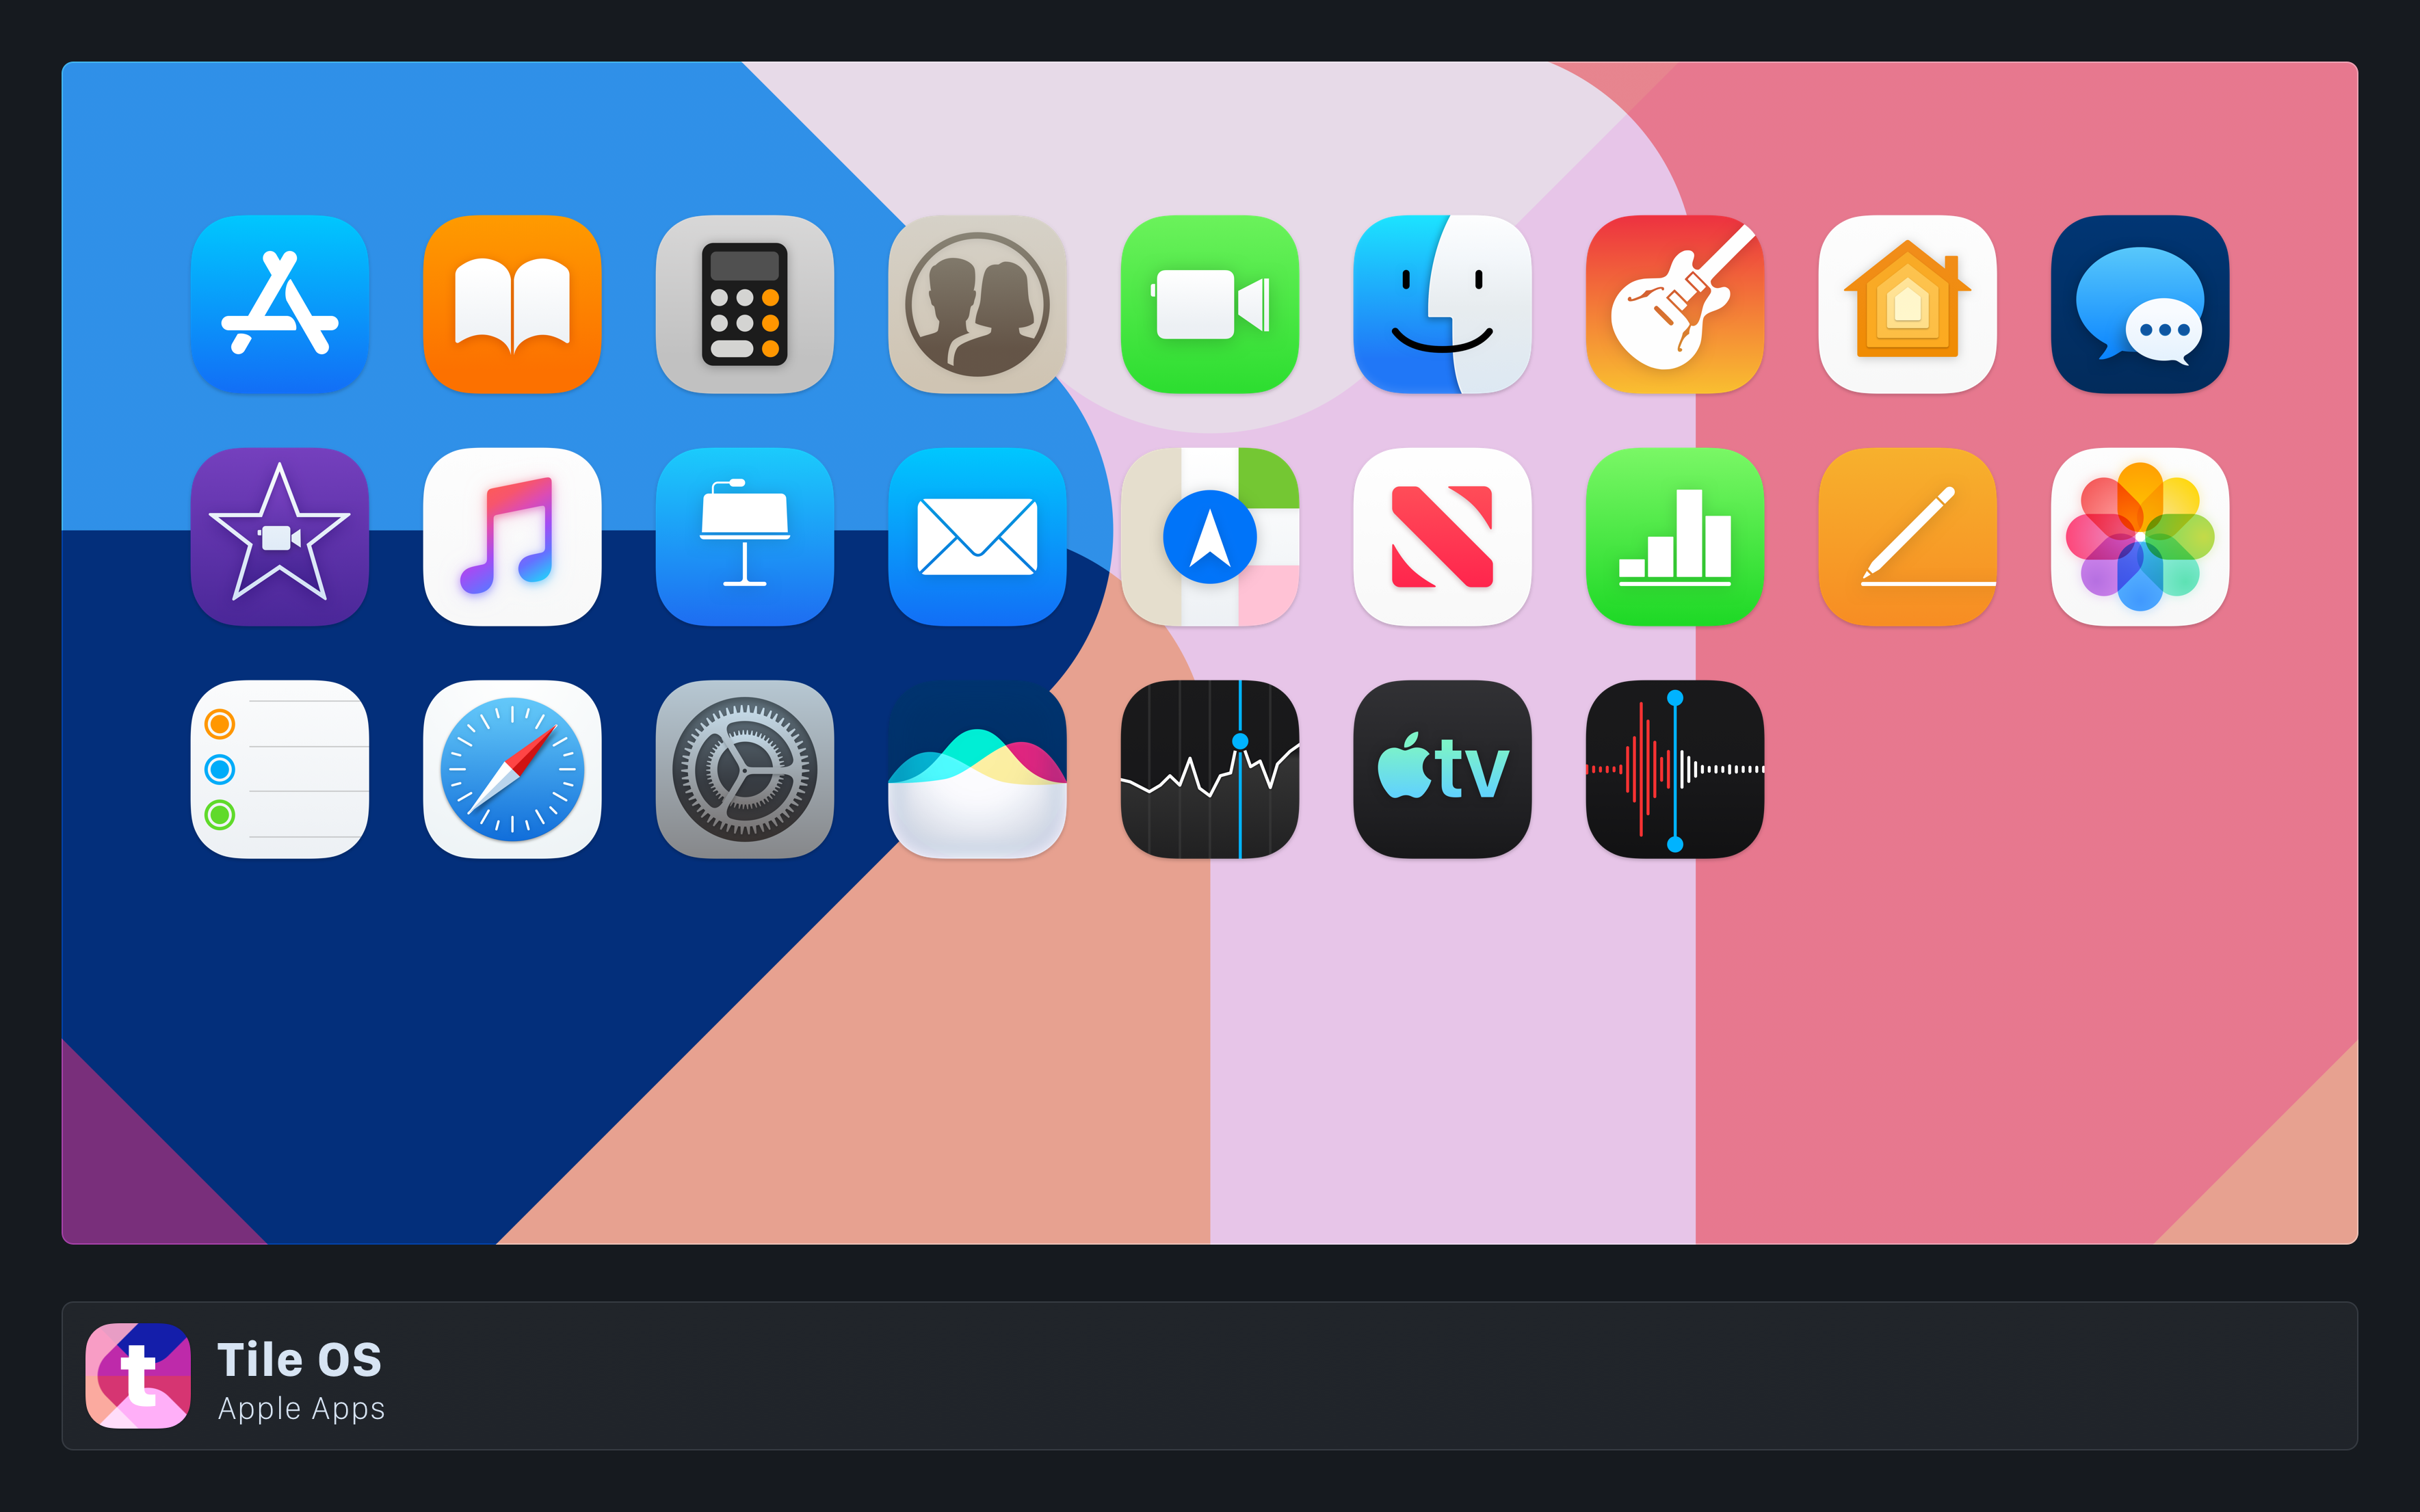 Mac os sierra icon pack for ubuntu